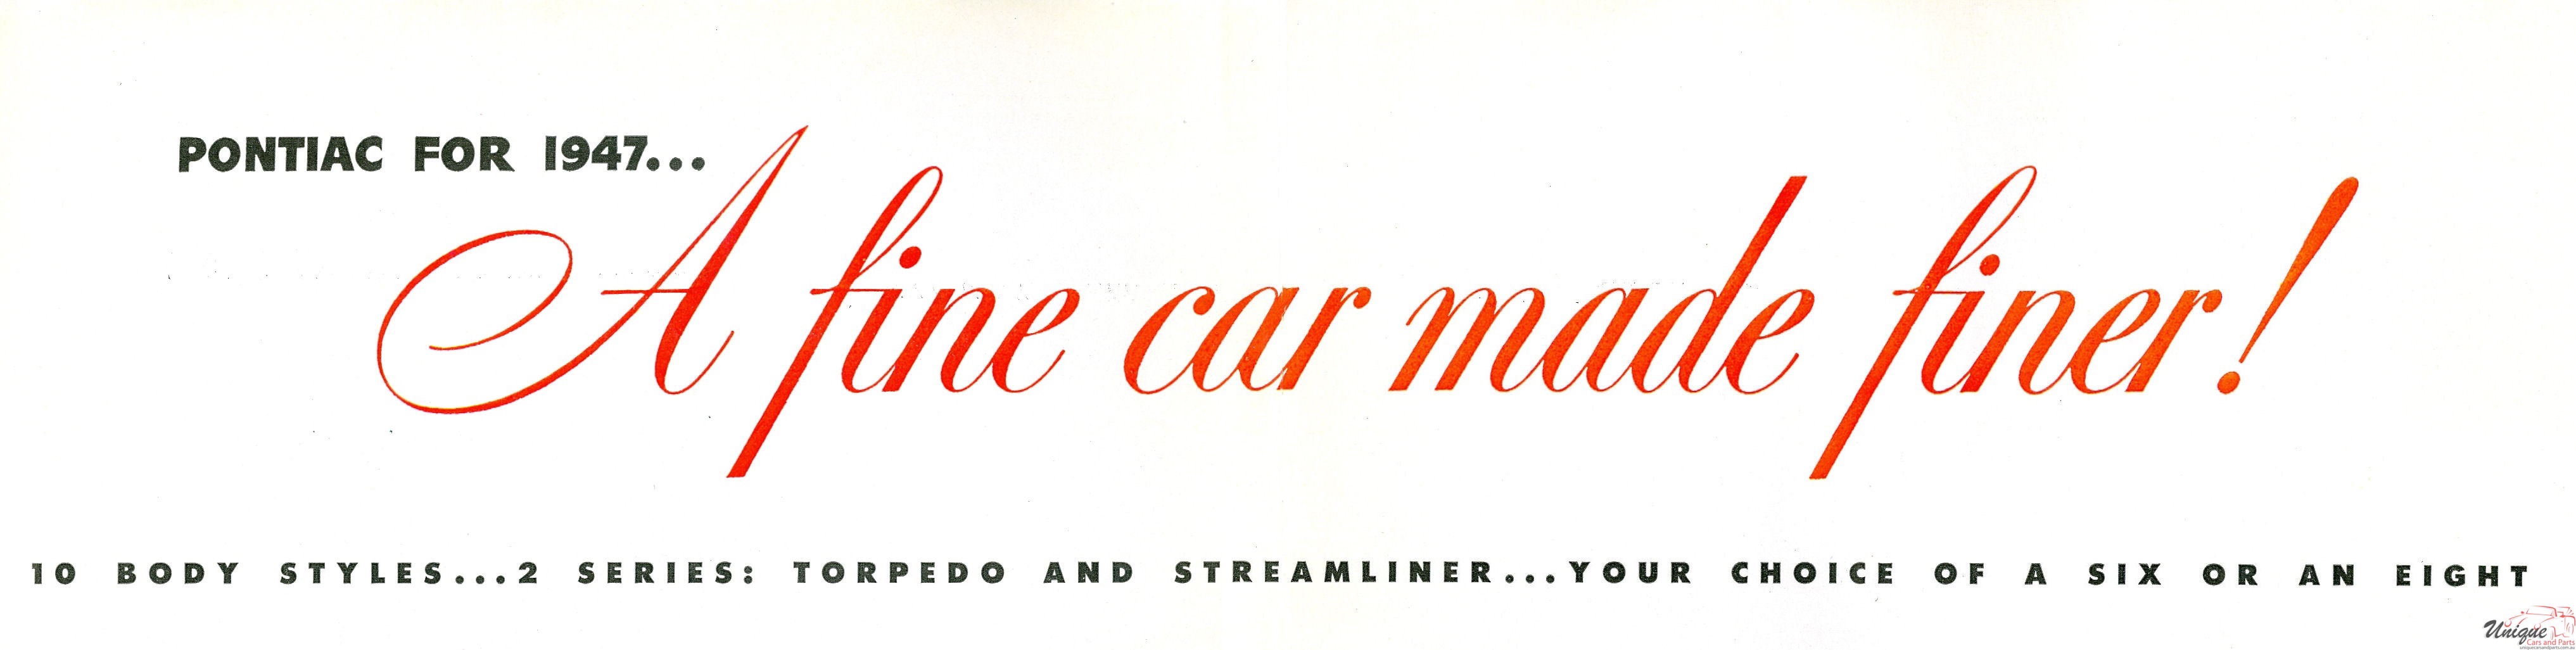 1947 Pontiac Brochure Page 1